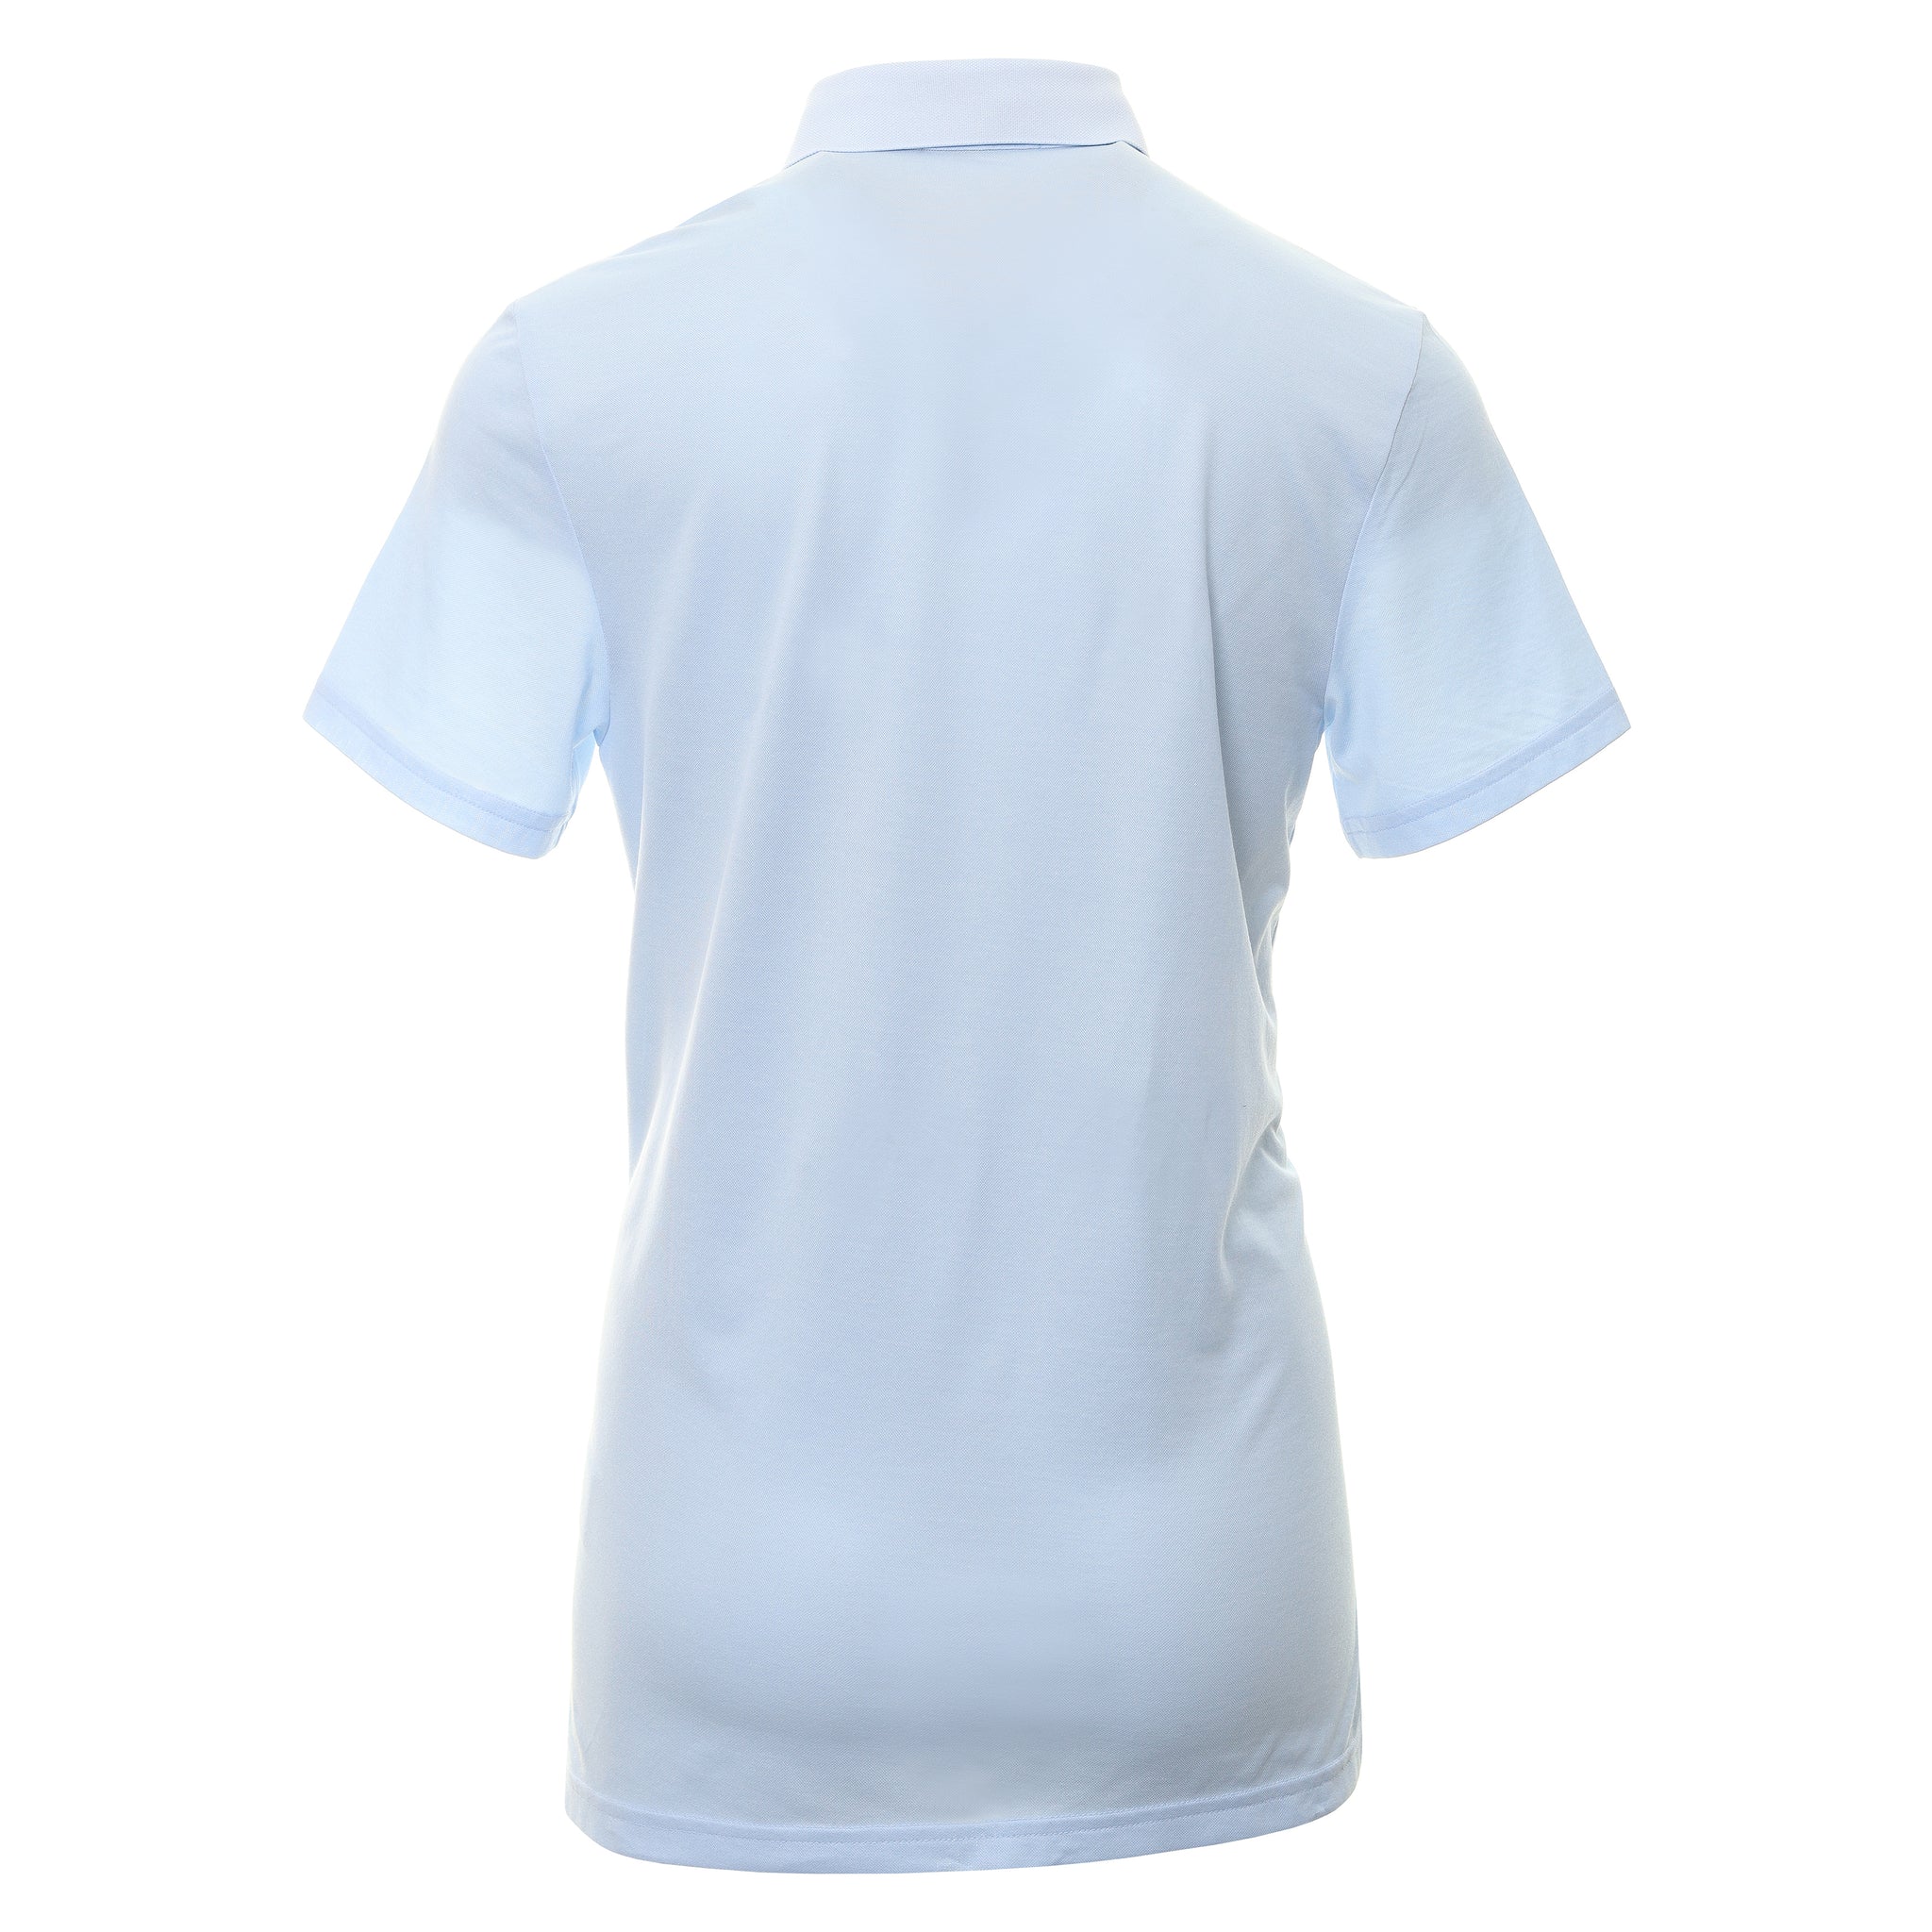 rlx-ralph-lauren-tour-pique-polo-shirt-785899296-office-blue-white-002